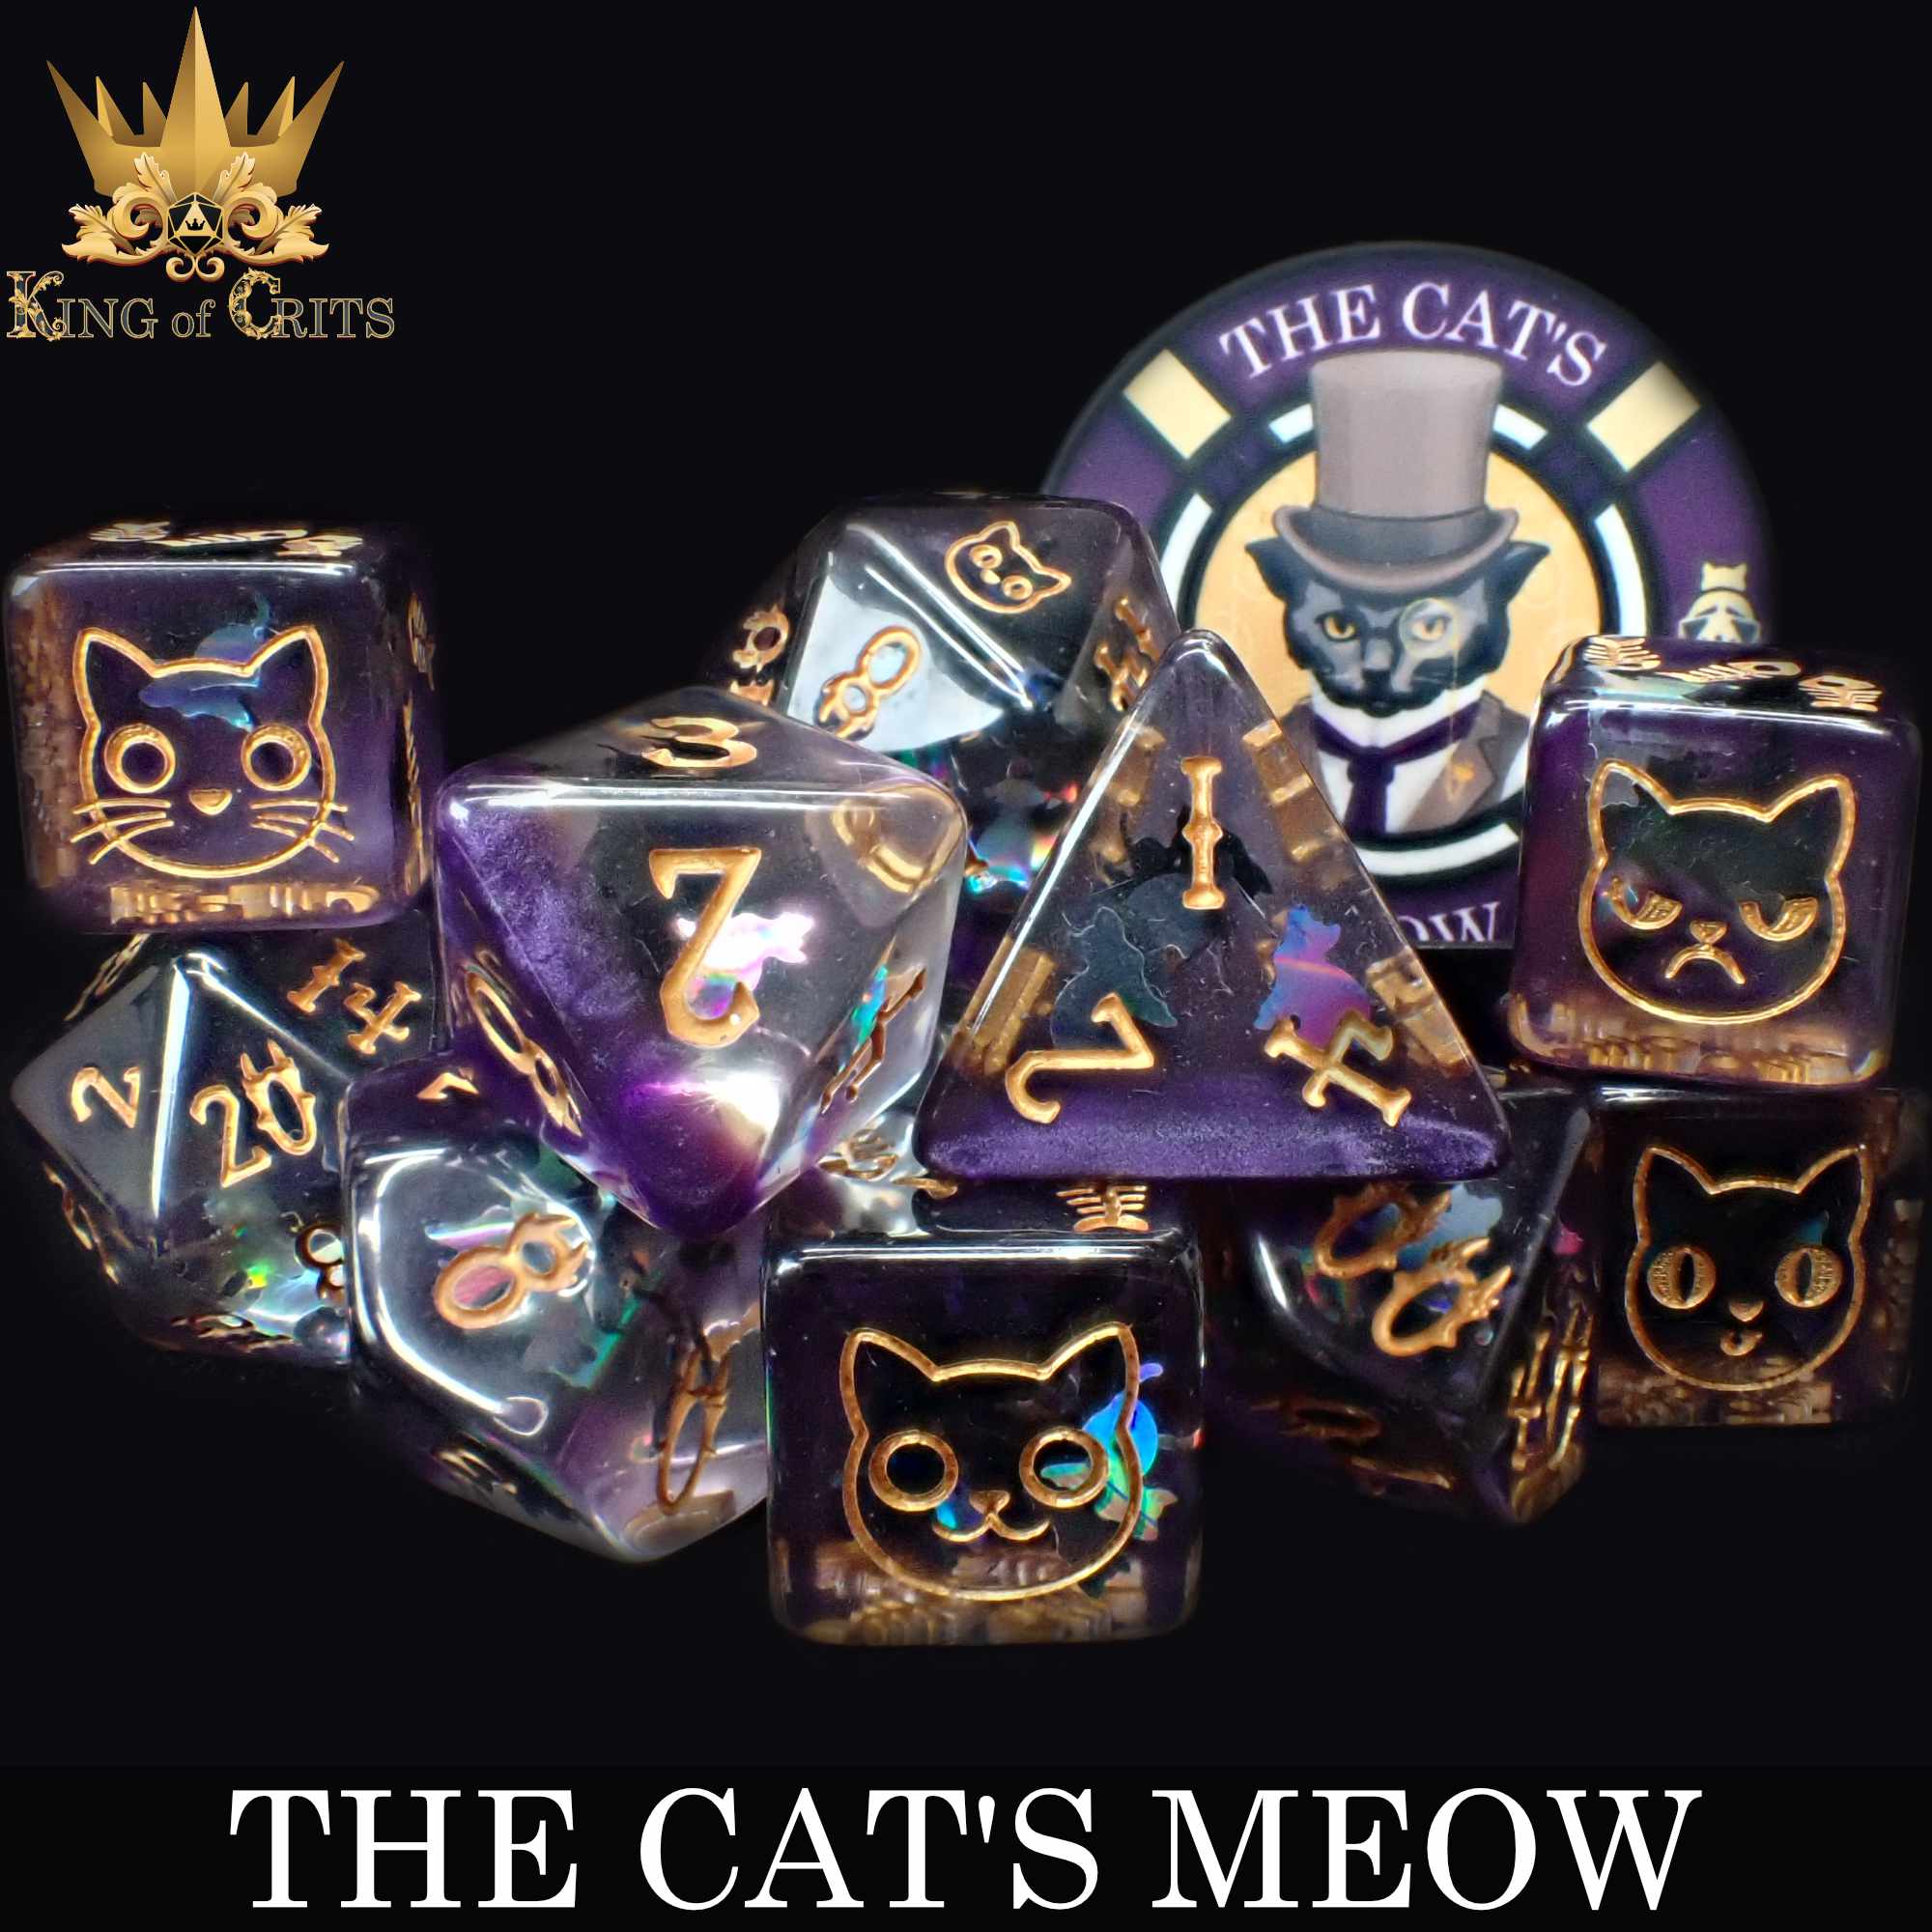 The Cat's Meow 11 Dice Set